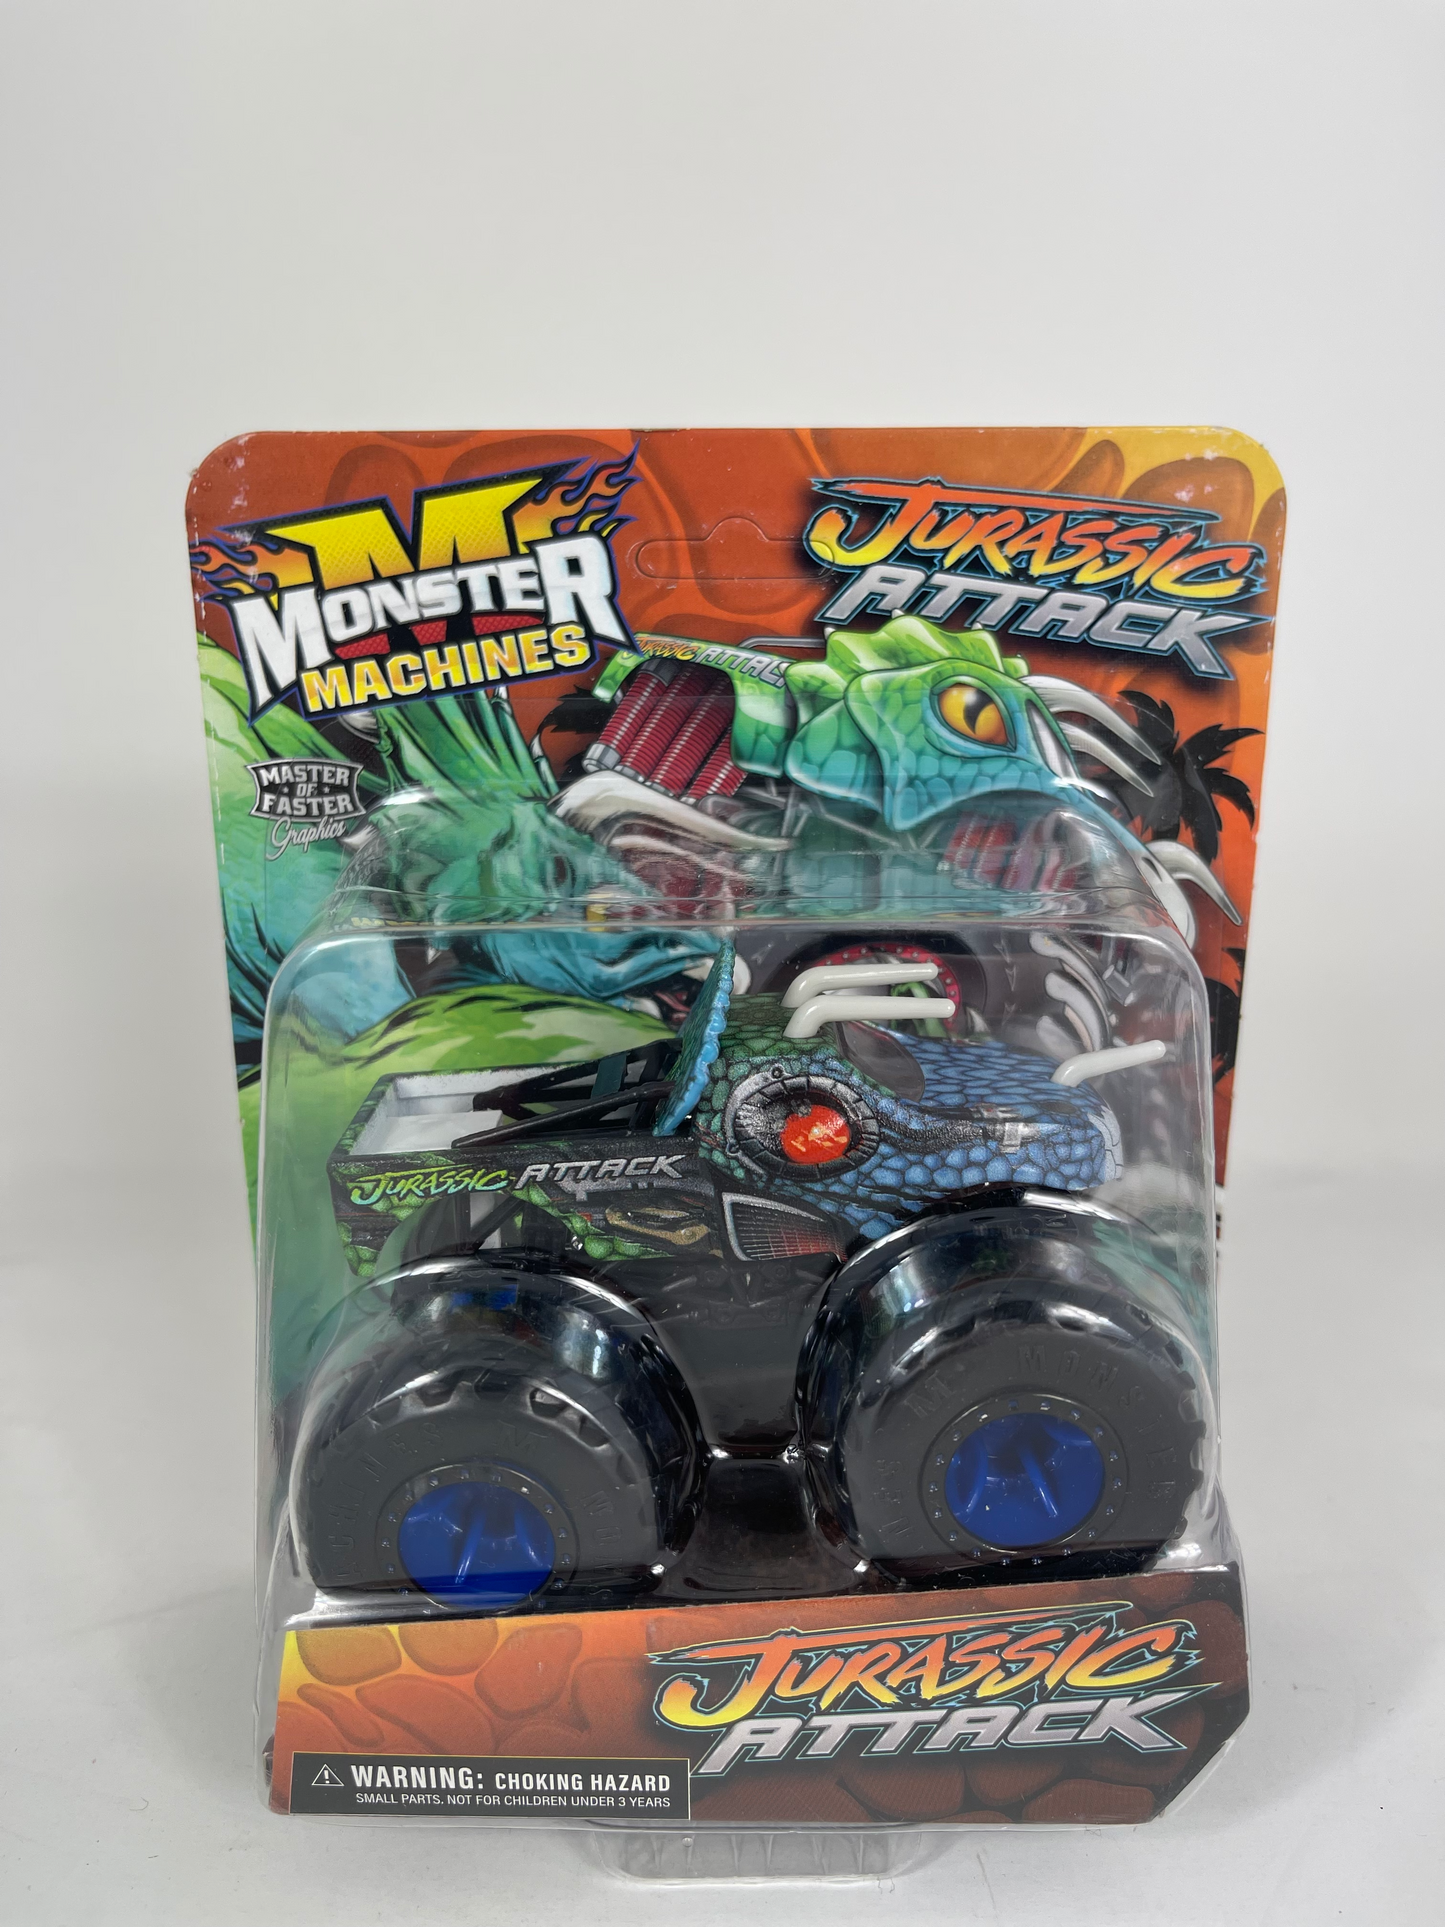 Jurassic Attack Monster Truck Toy 1:64